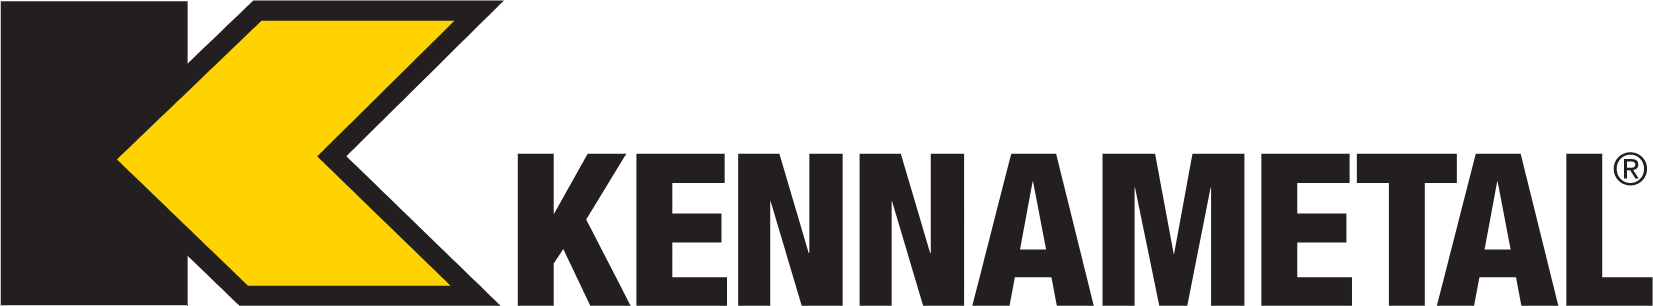 Kennametal logo large (transparent PNG)